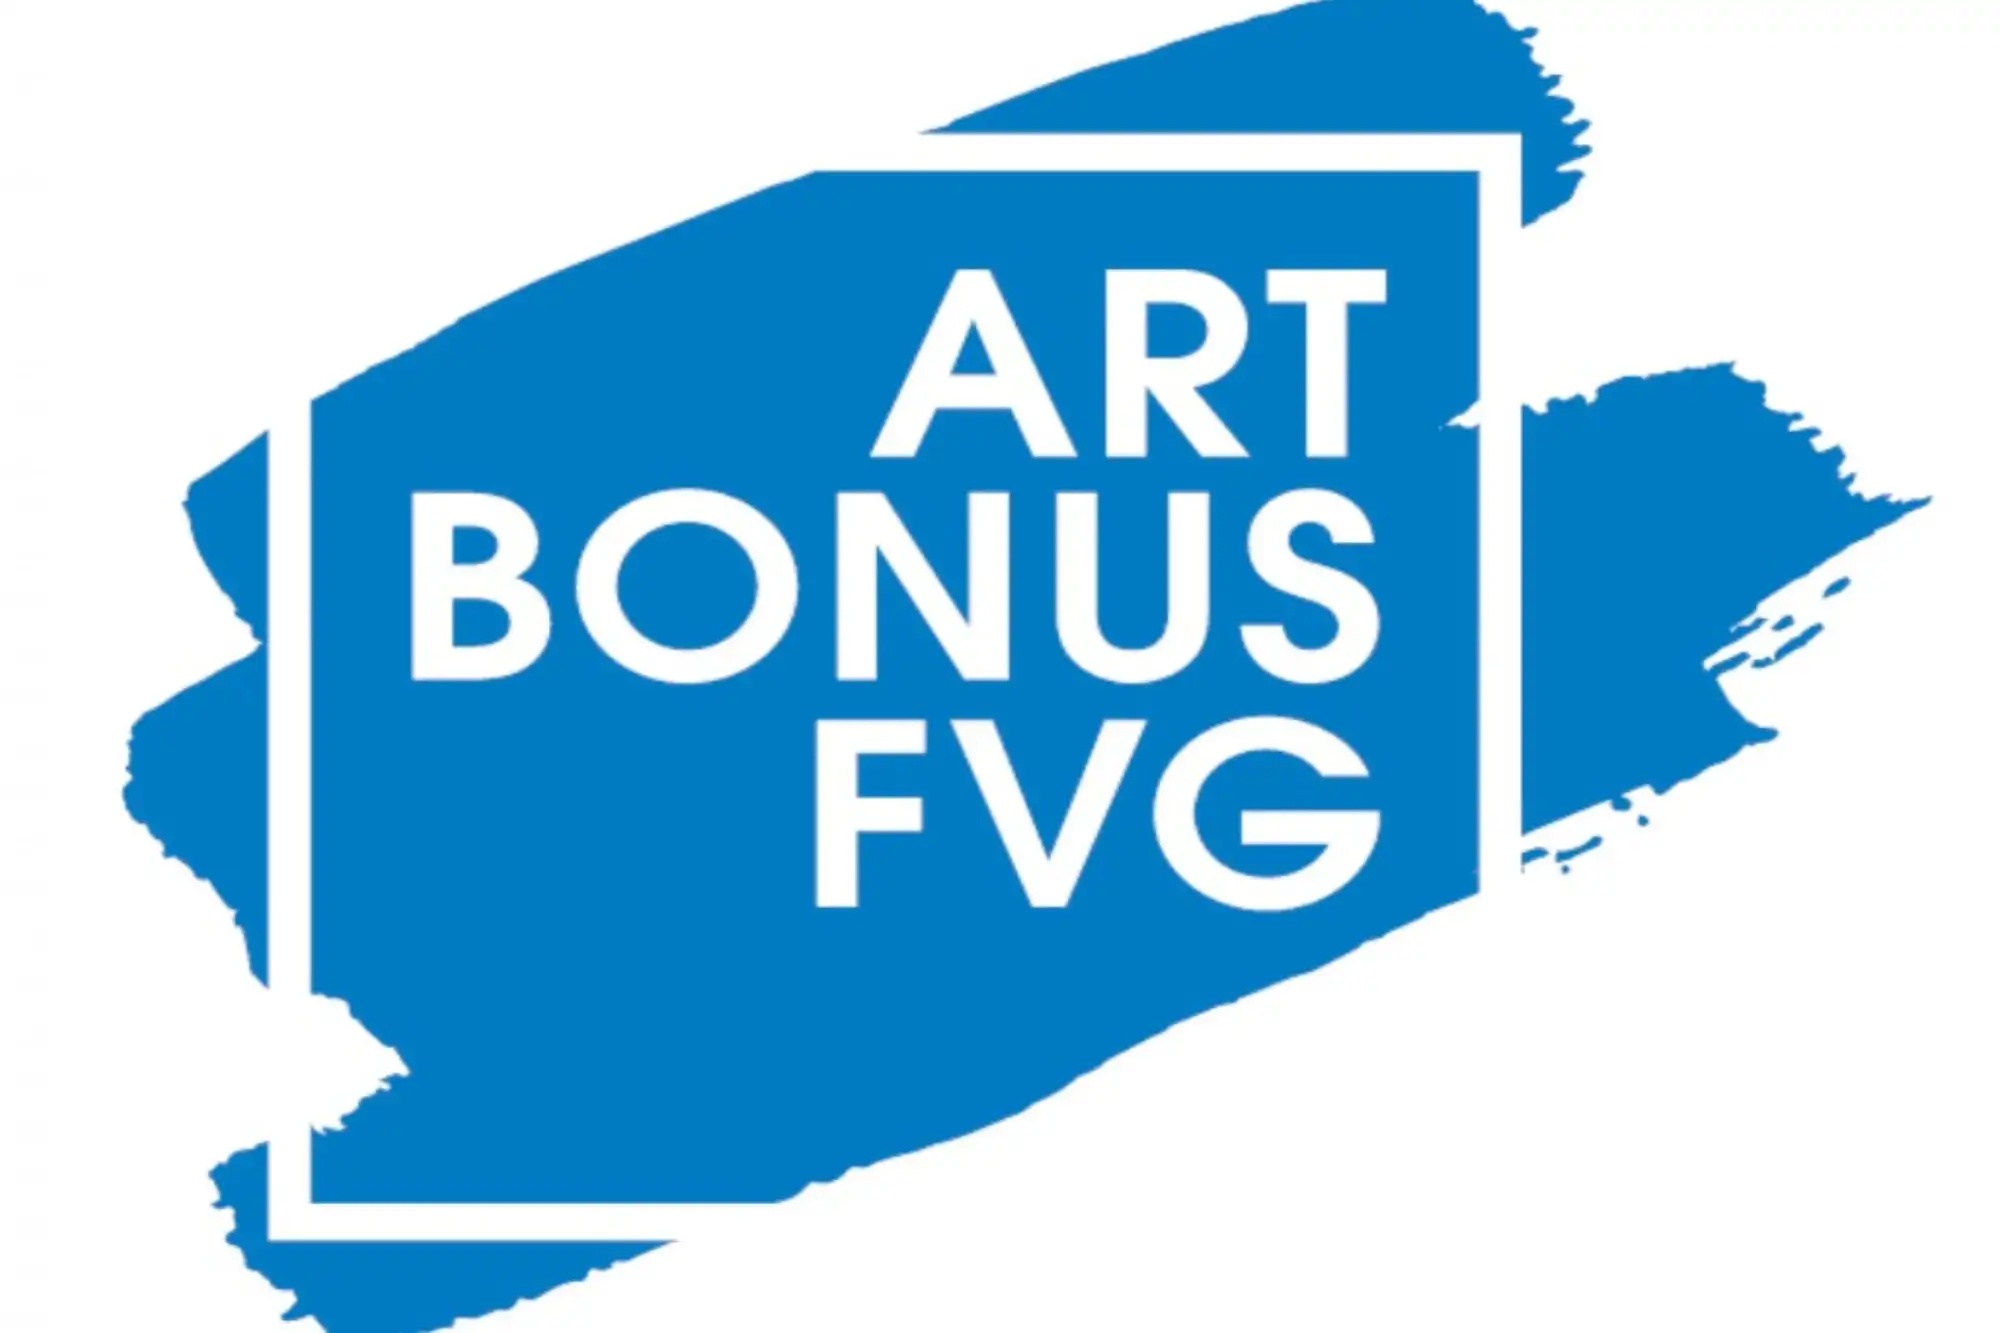 Art Bonus FVG